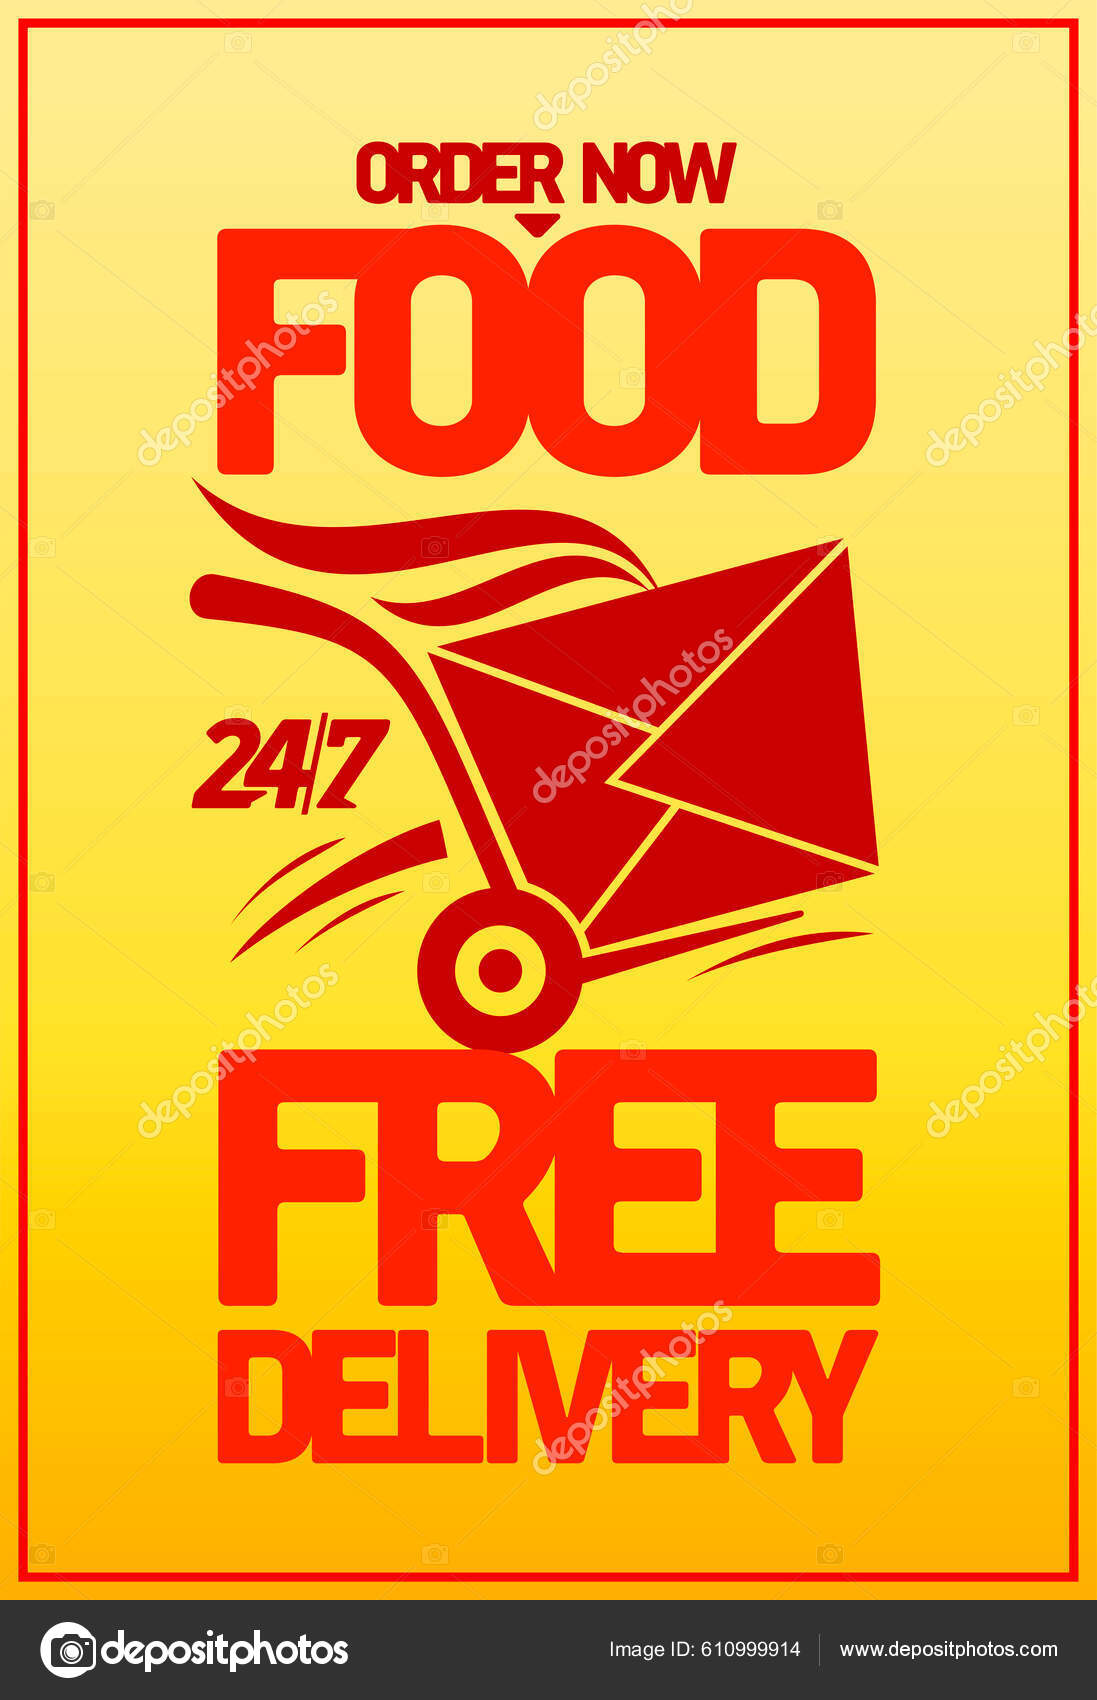 https://st.depositphotos.com/1807998/61099/v/1600/depositphotos_610999914-stock-illustration-fast-free-food-delivery-vector.jpg